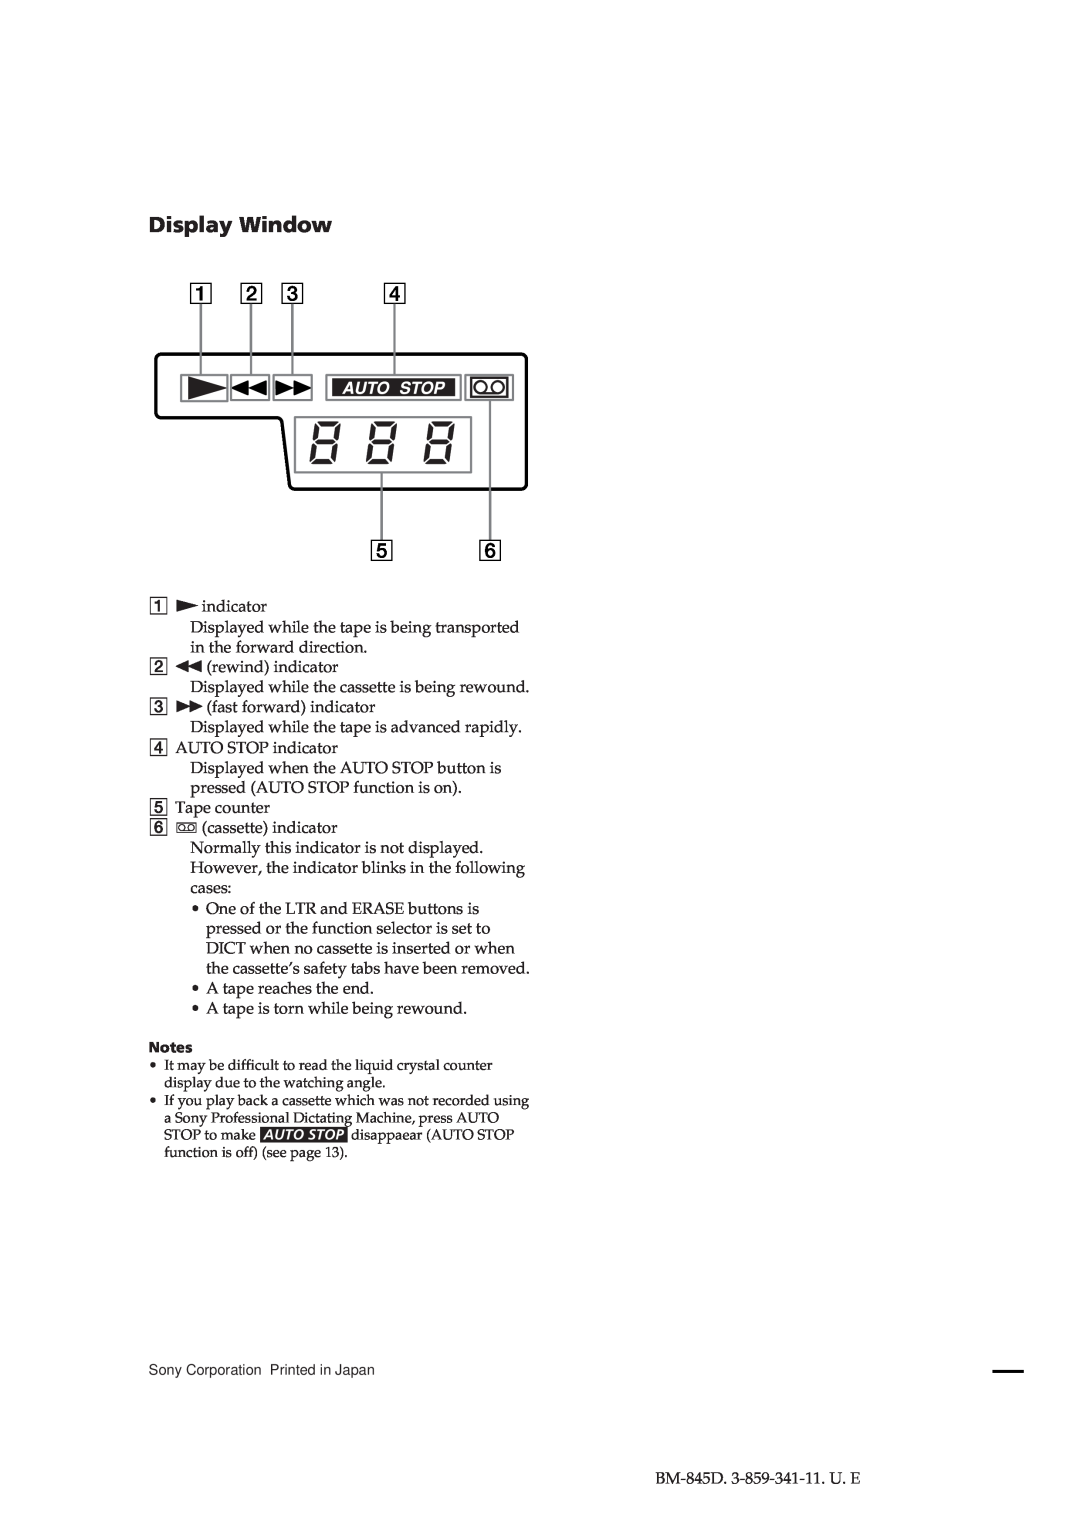 Sony BM-845D manual Display Window, Additional Information 